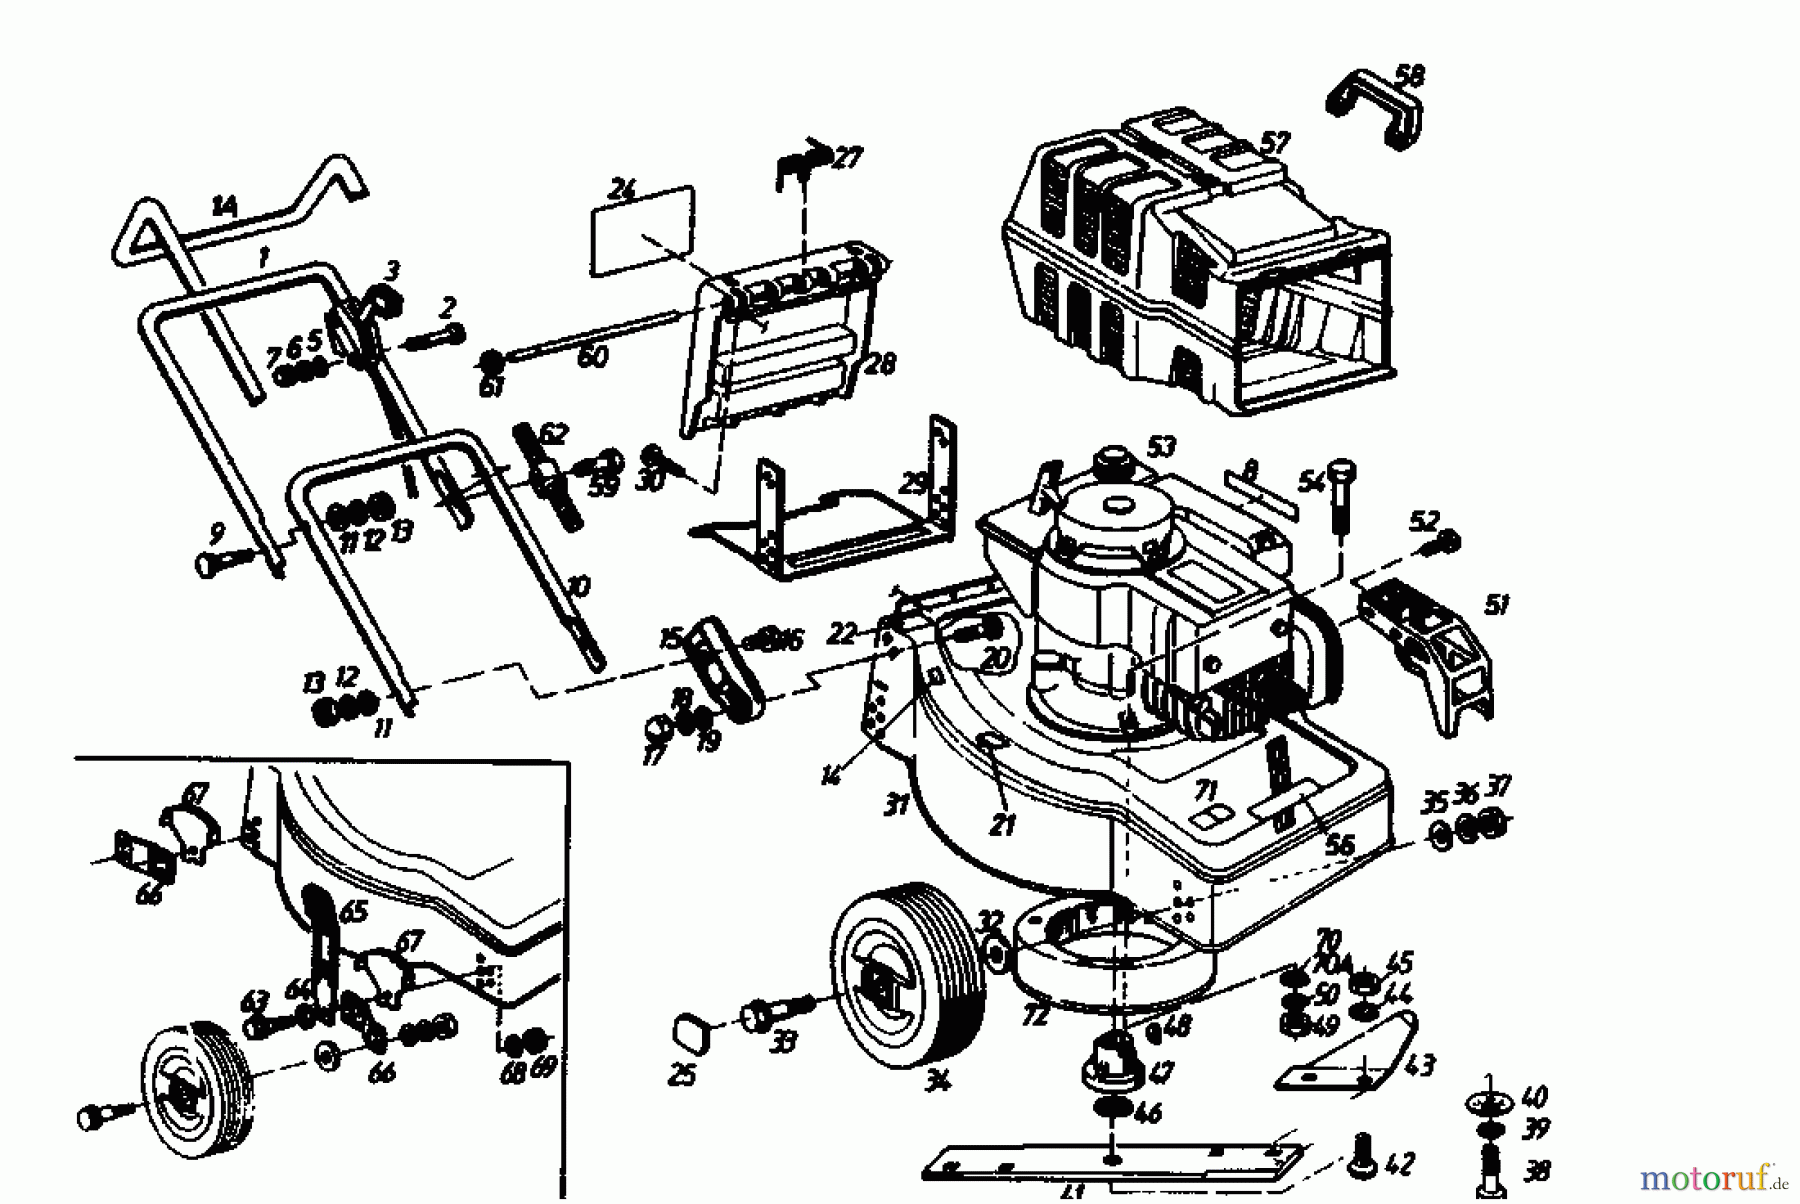  Golf Petrol mower HBL 02880.04  (1989) Basic machine